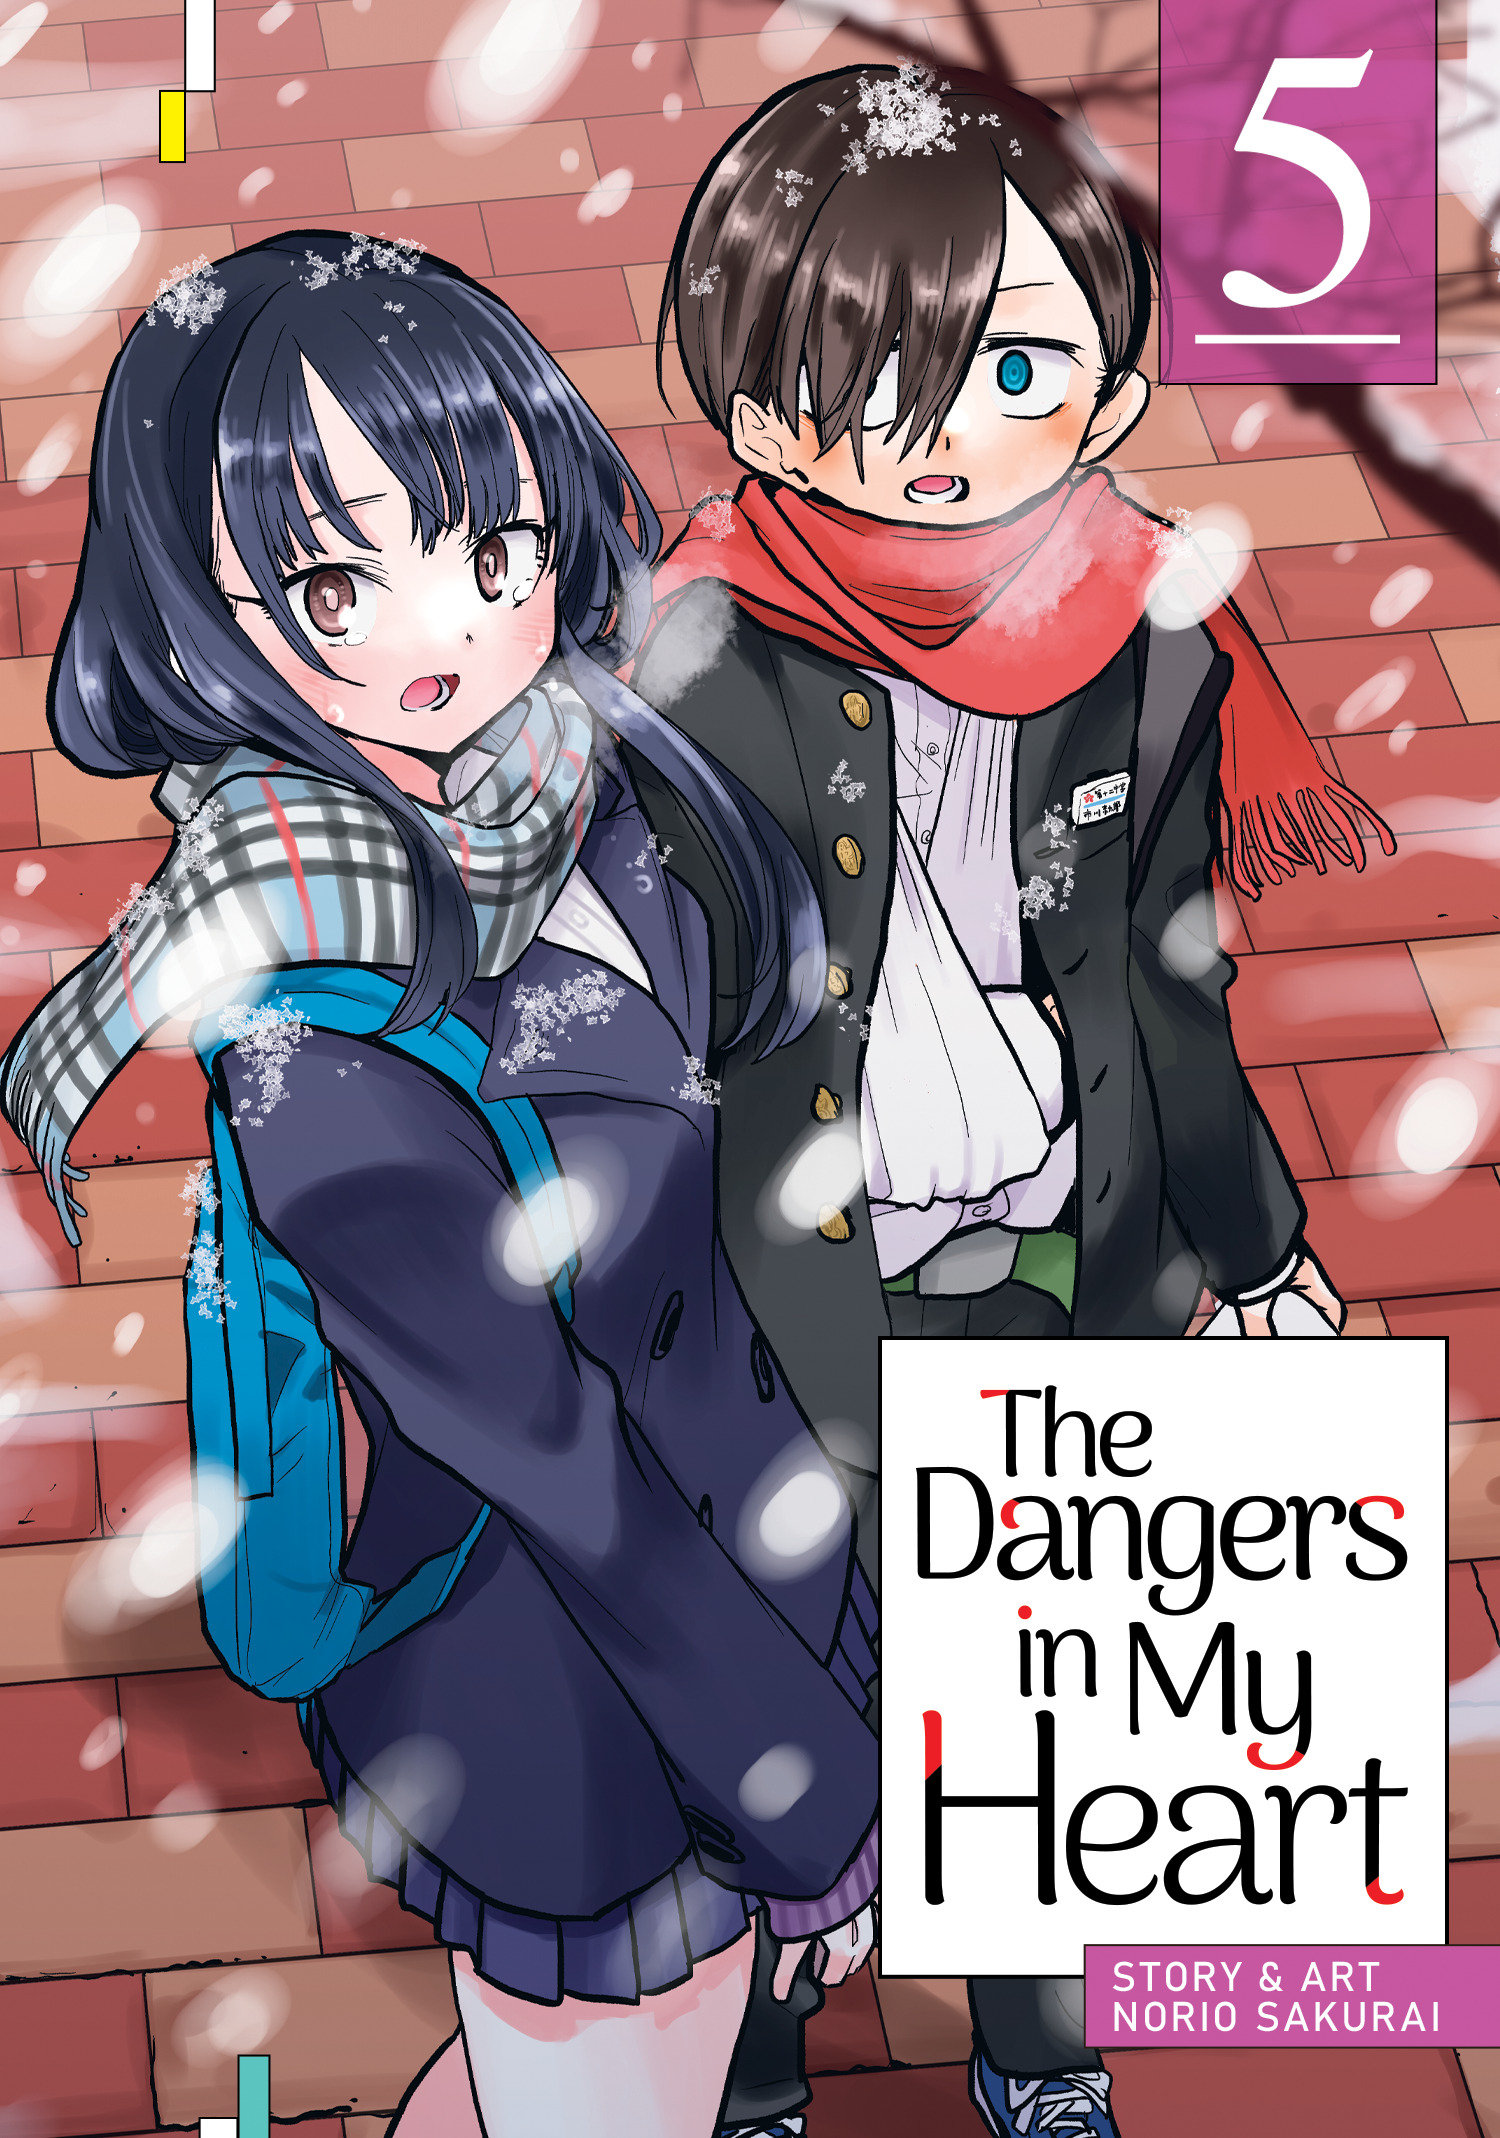 The Dangers in My Heart Manga Volume 5